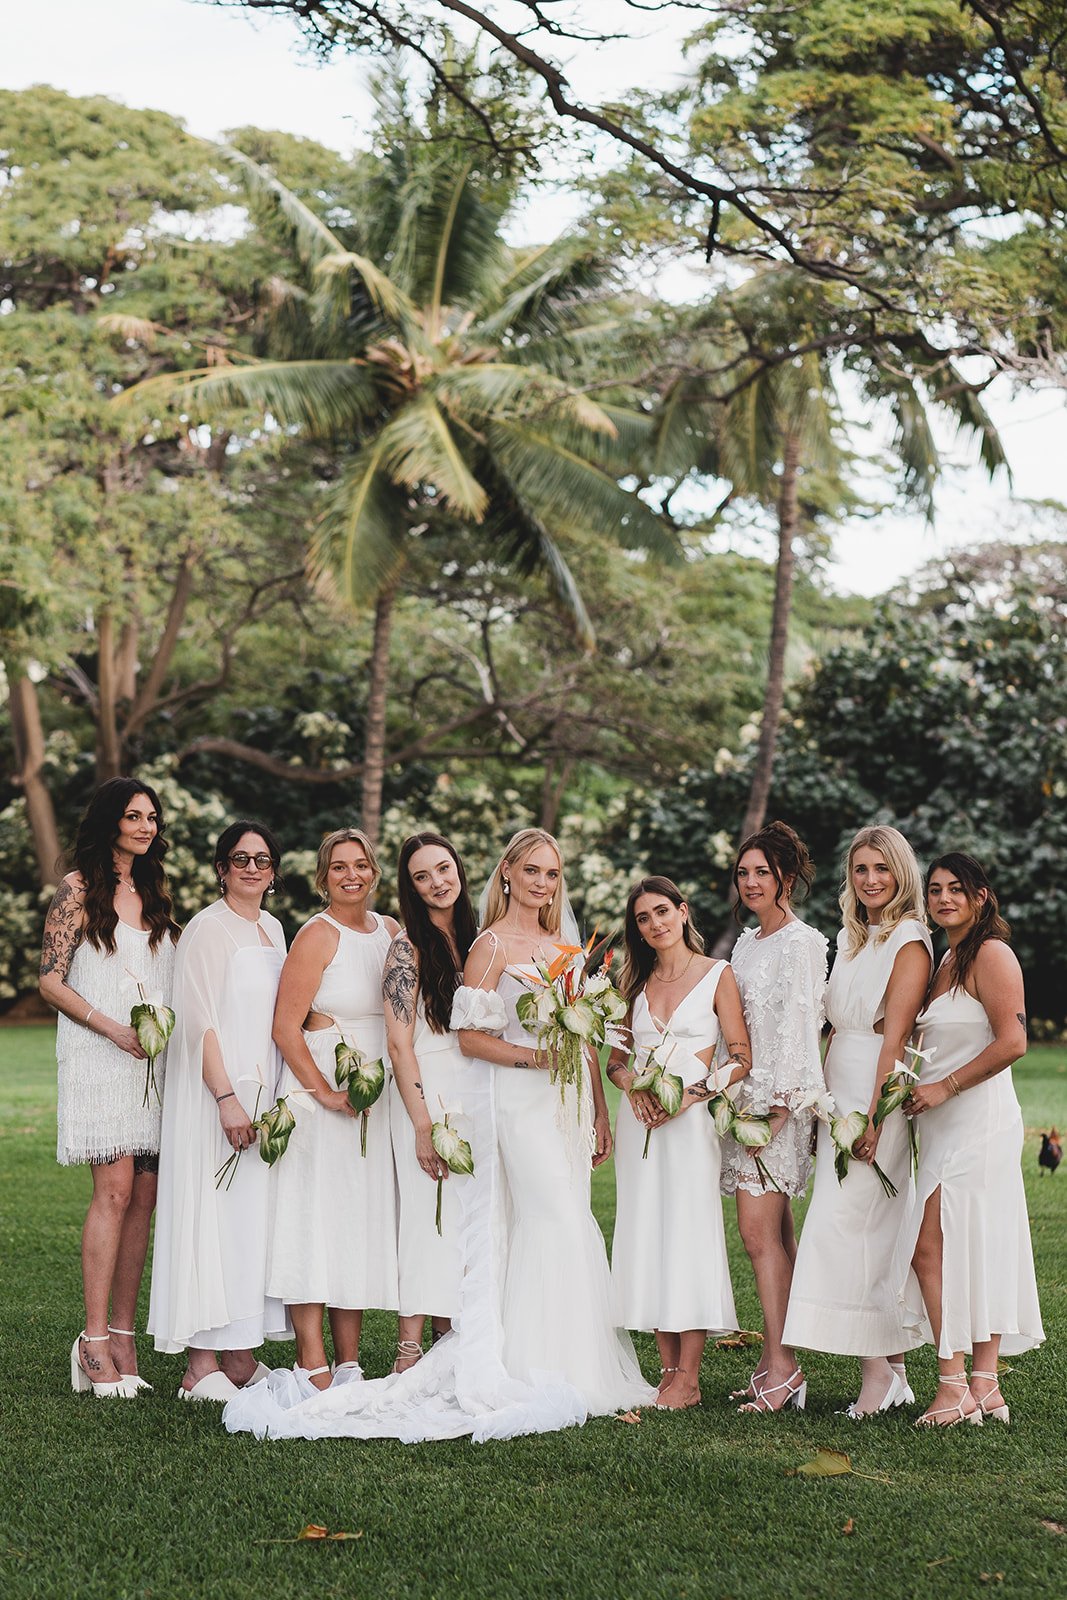 Tara Lee Photography | Hawaii Wedding & Elopement Photographer